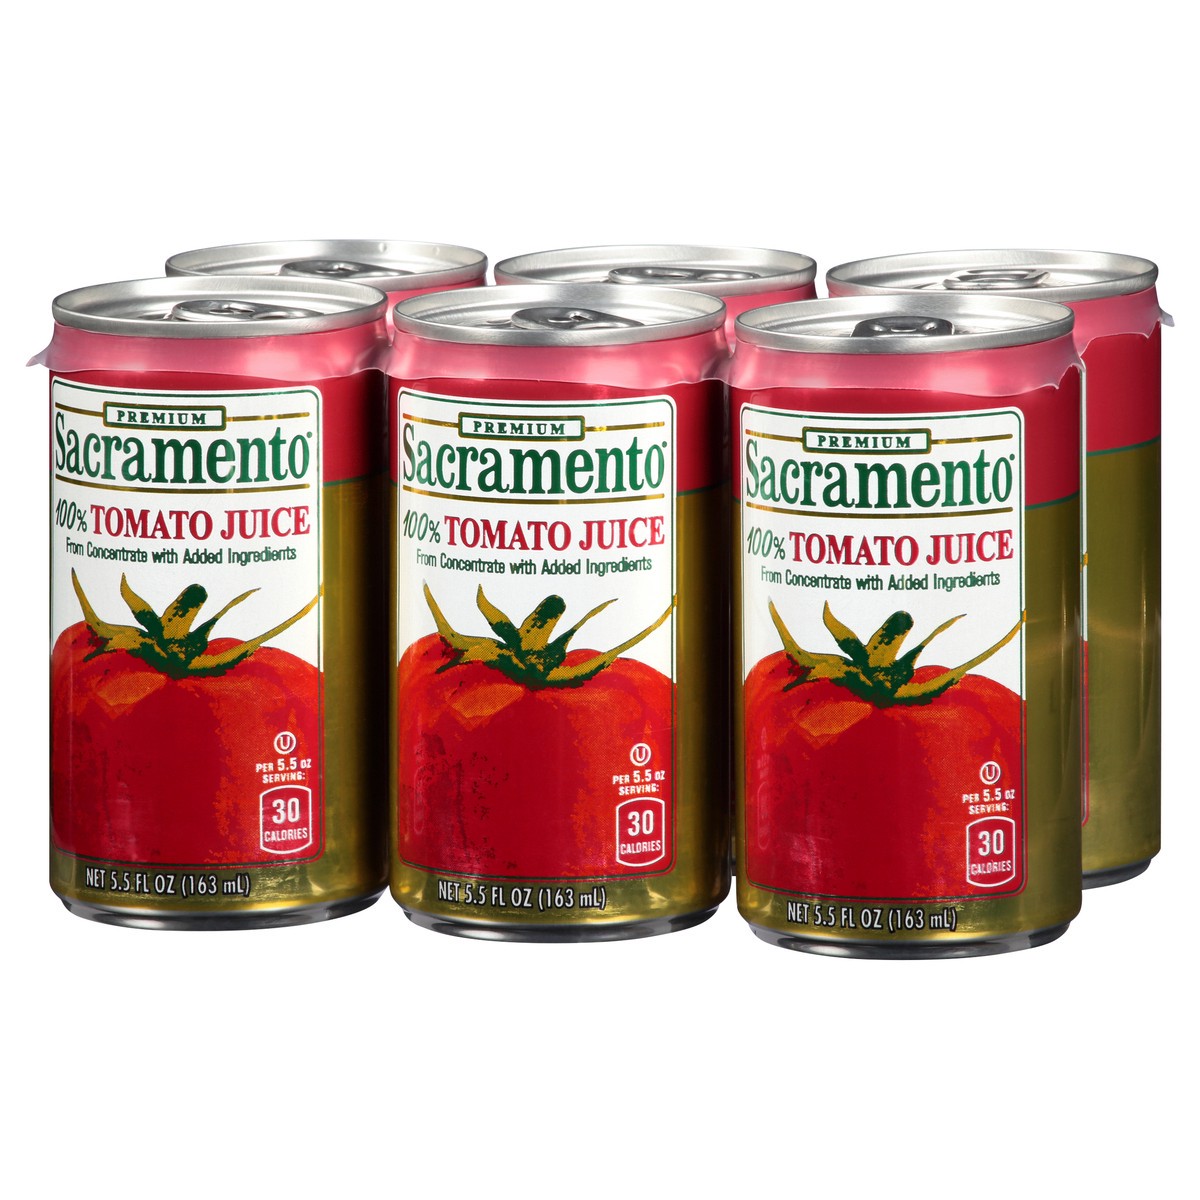 slide 2 of 14, Sacramento Premium 100% Tomato Juice 6-5.5 fl. oz. Cans, 6 ct